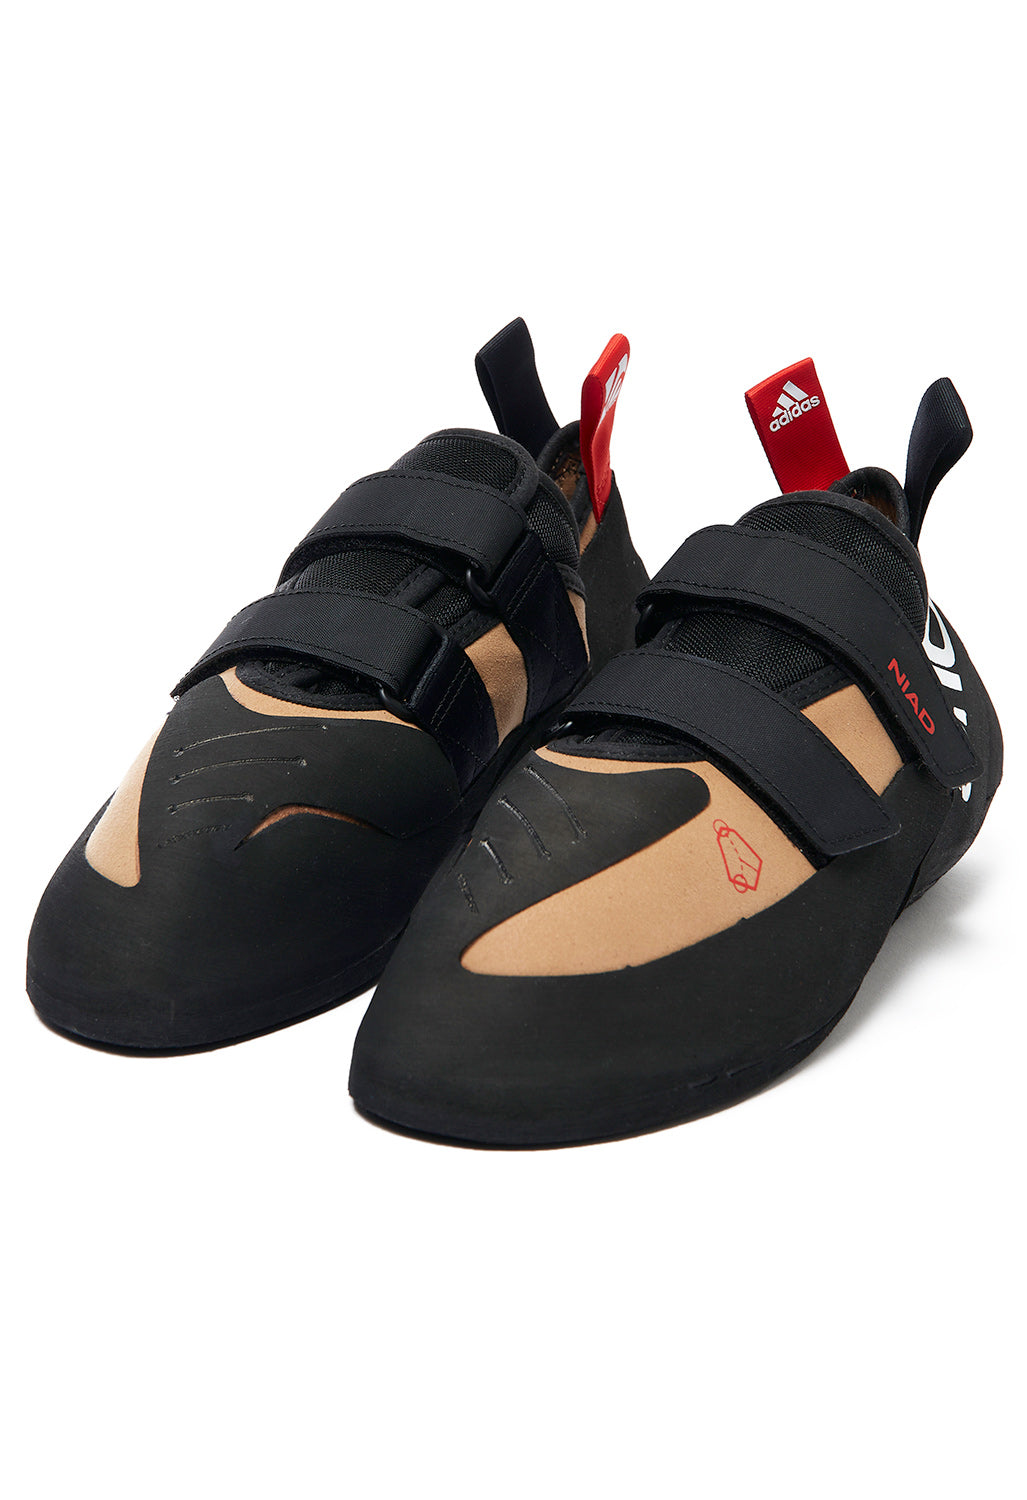 adidas Five Ten NIAD Velcro Men's Shoes - Mesa/Core Black/Ftwr White